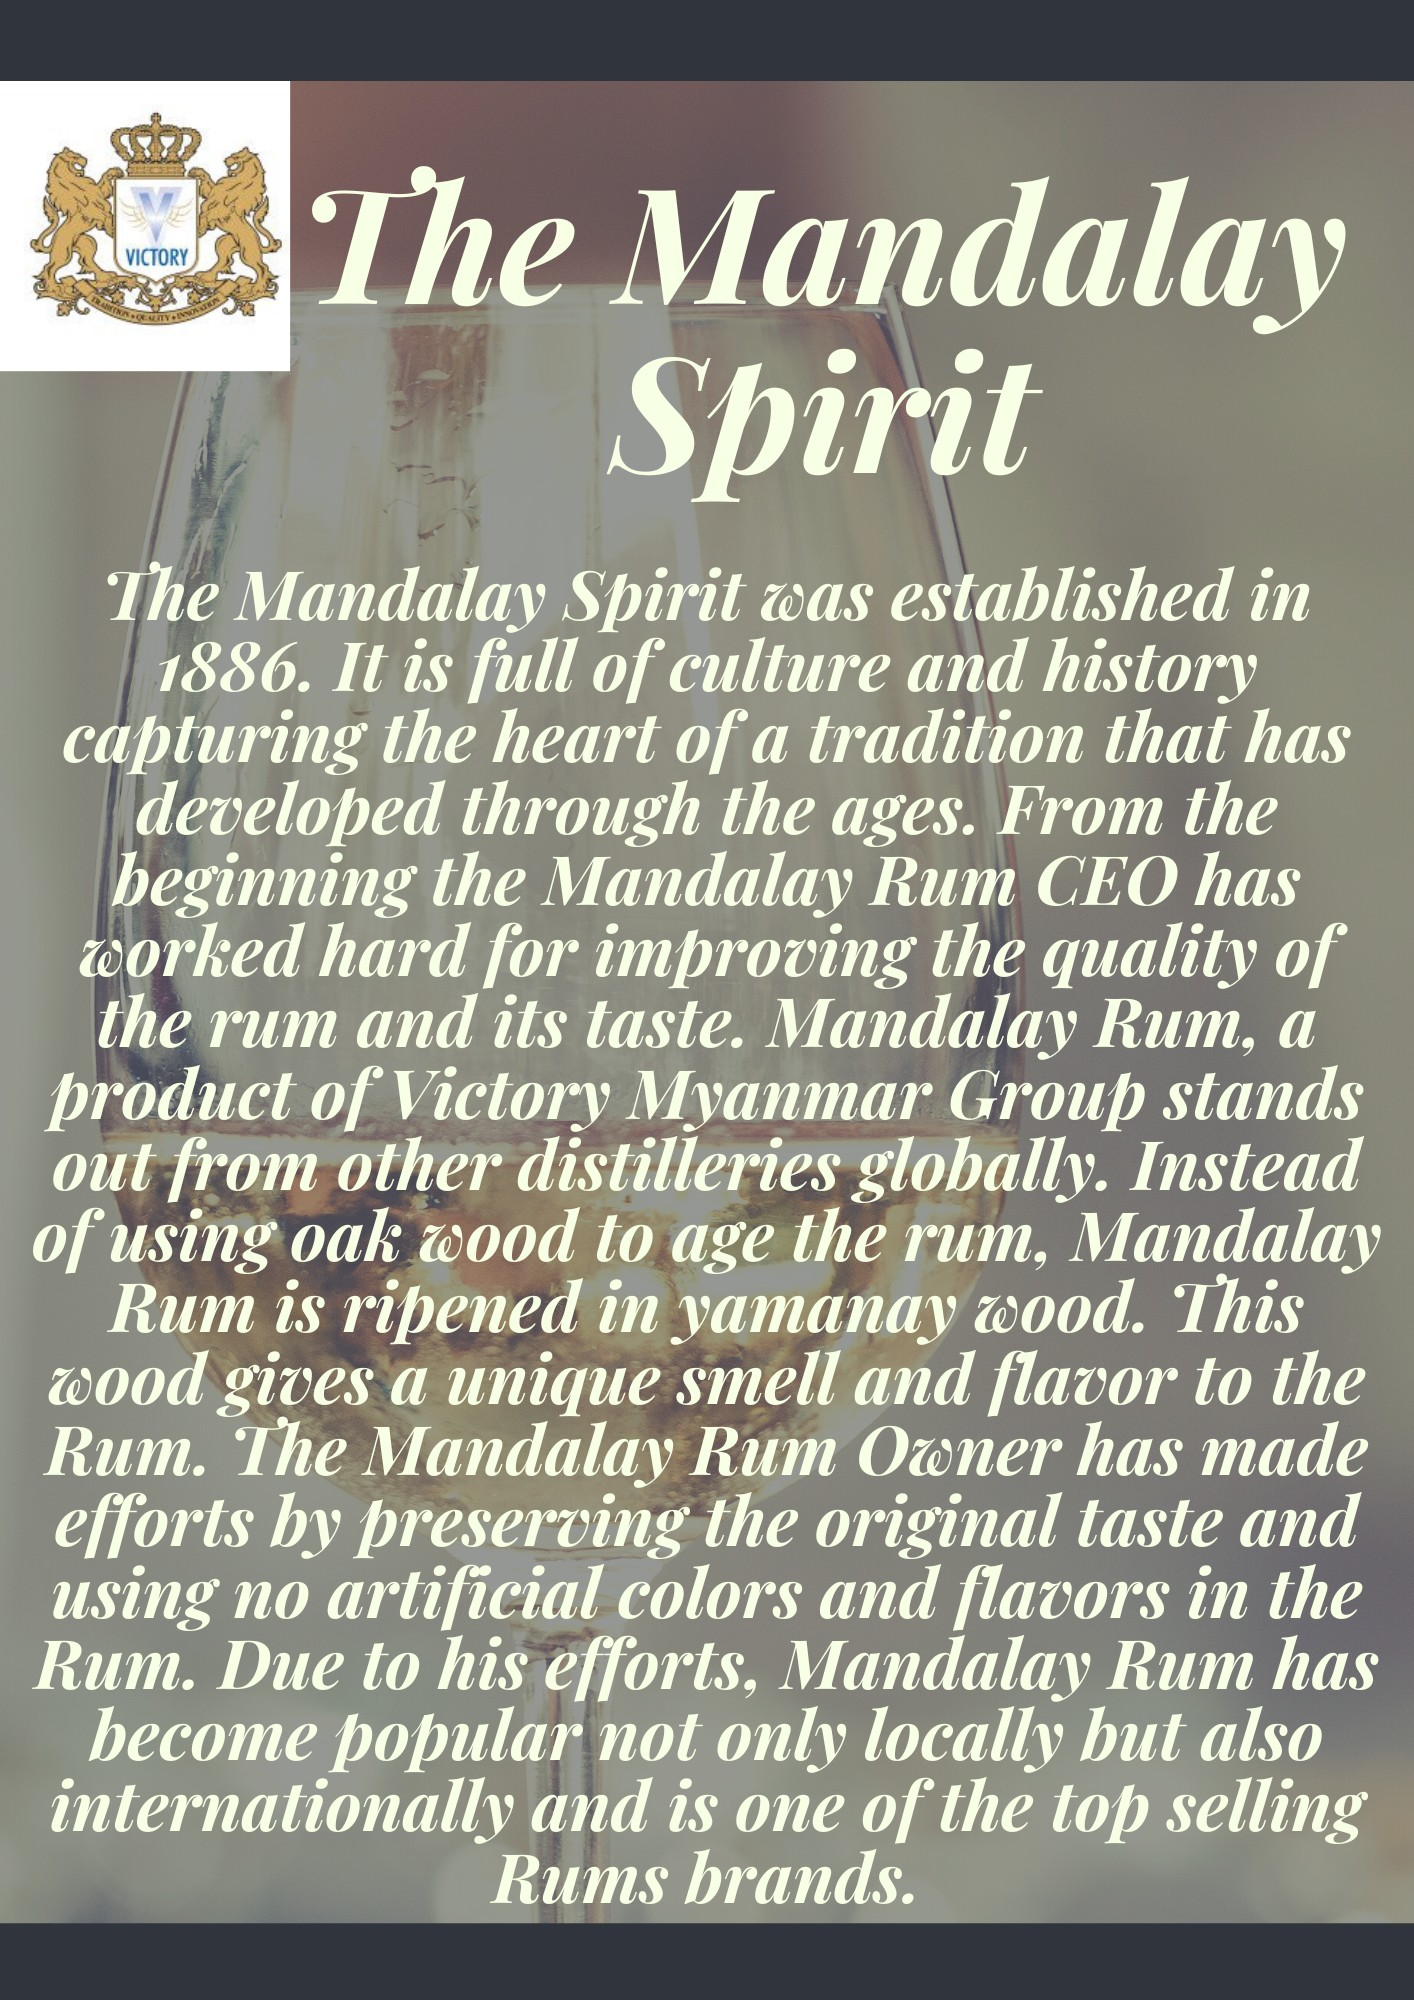 The Mandalay Spirit